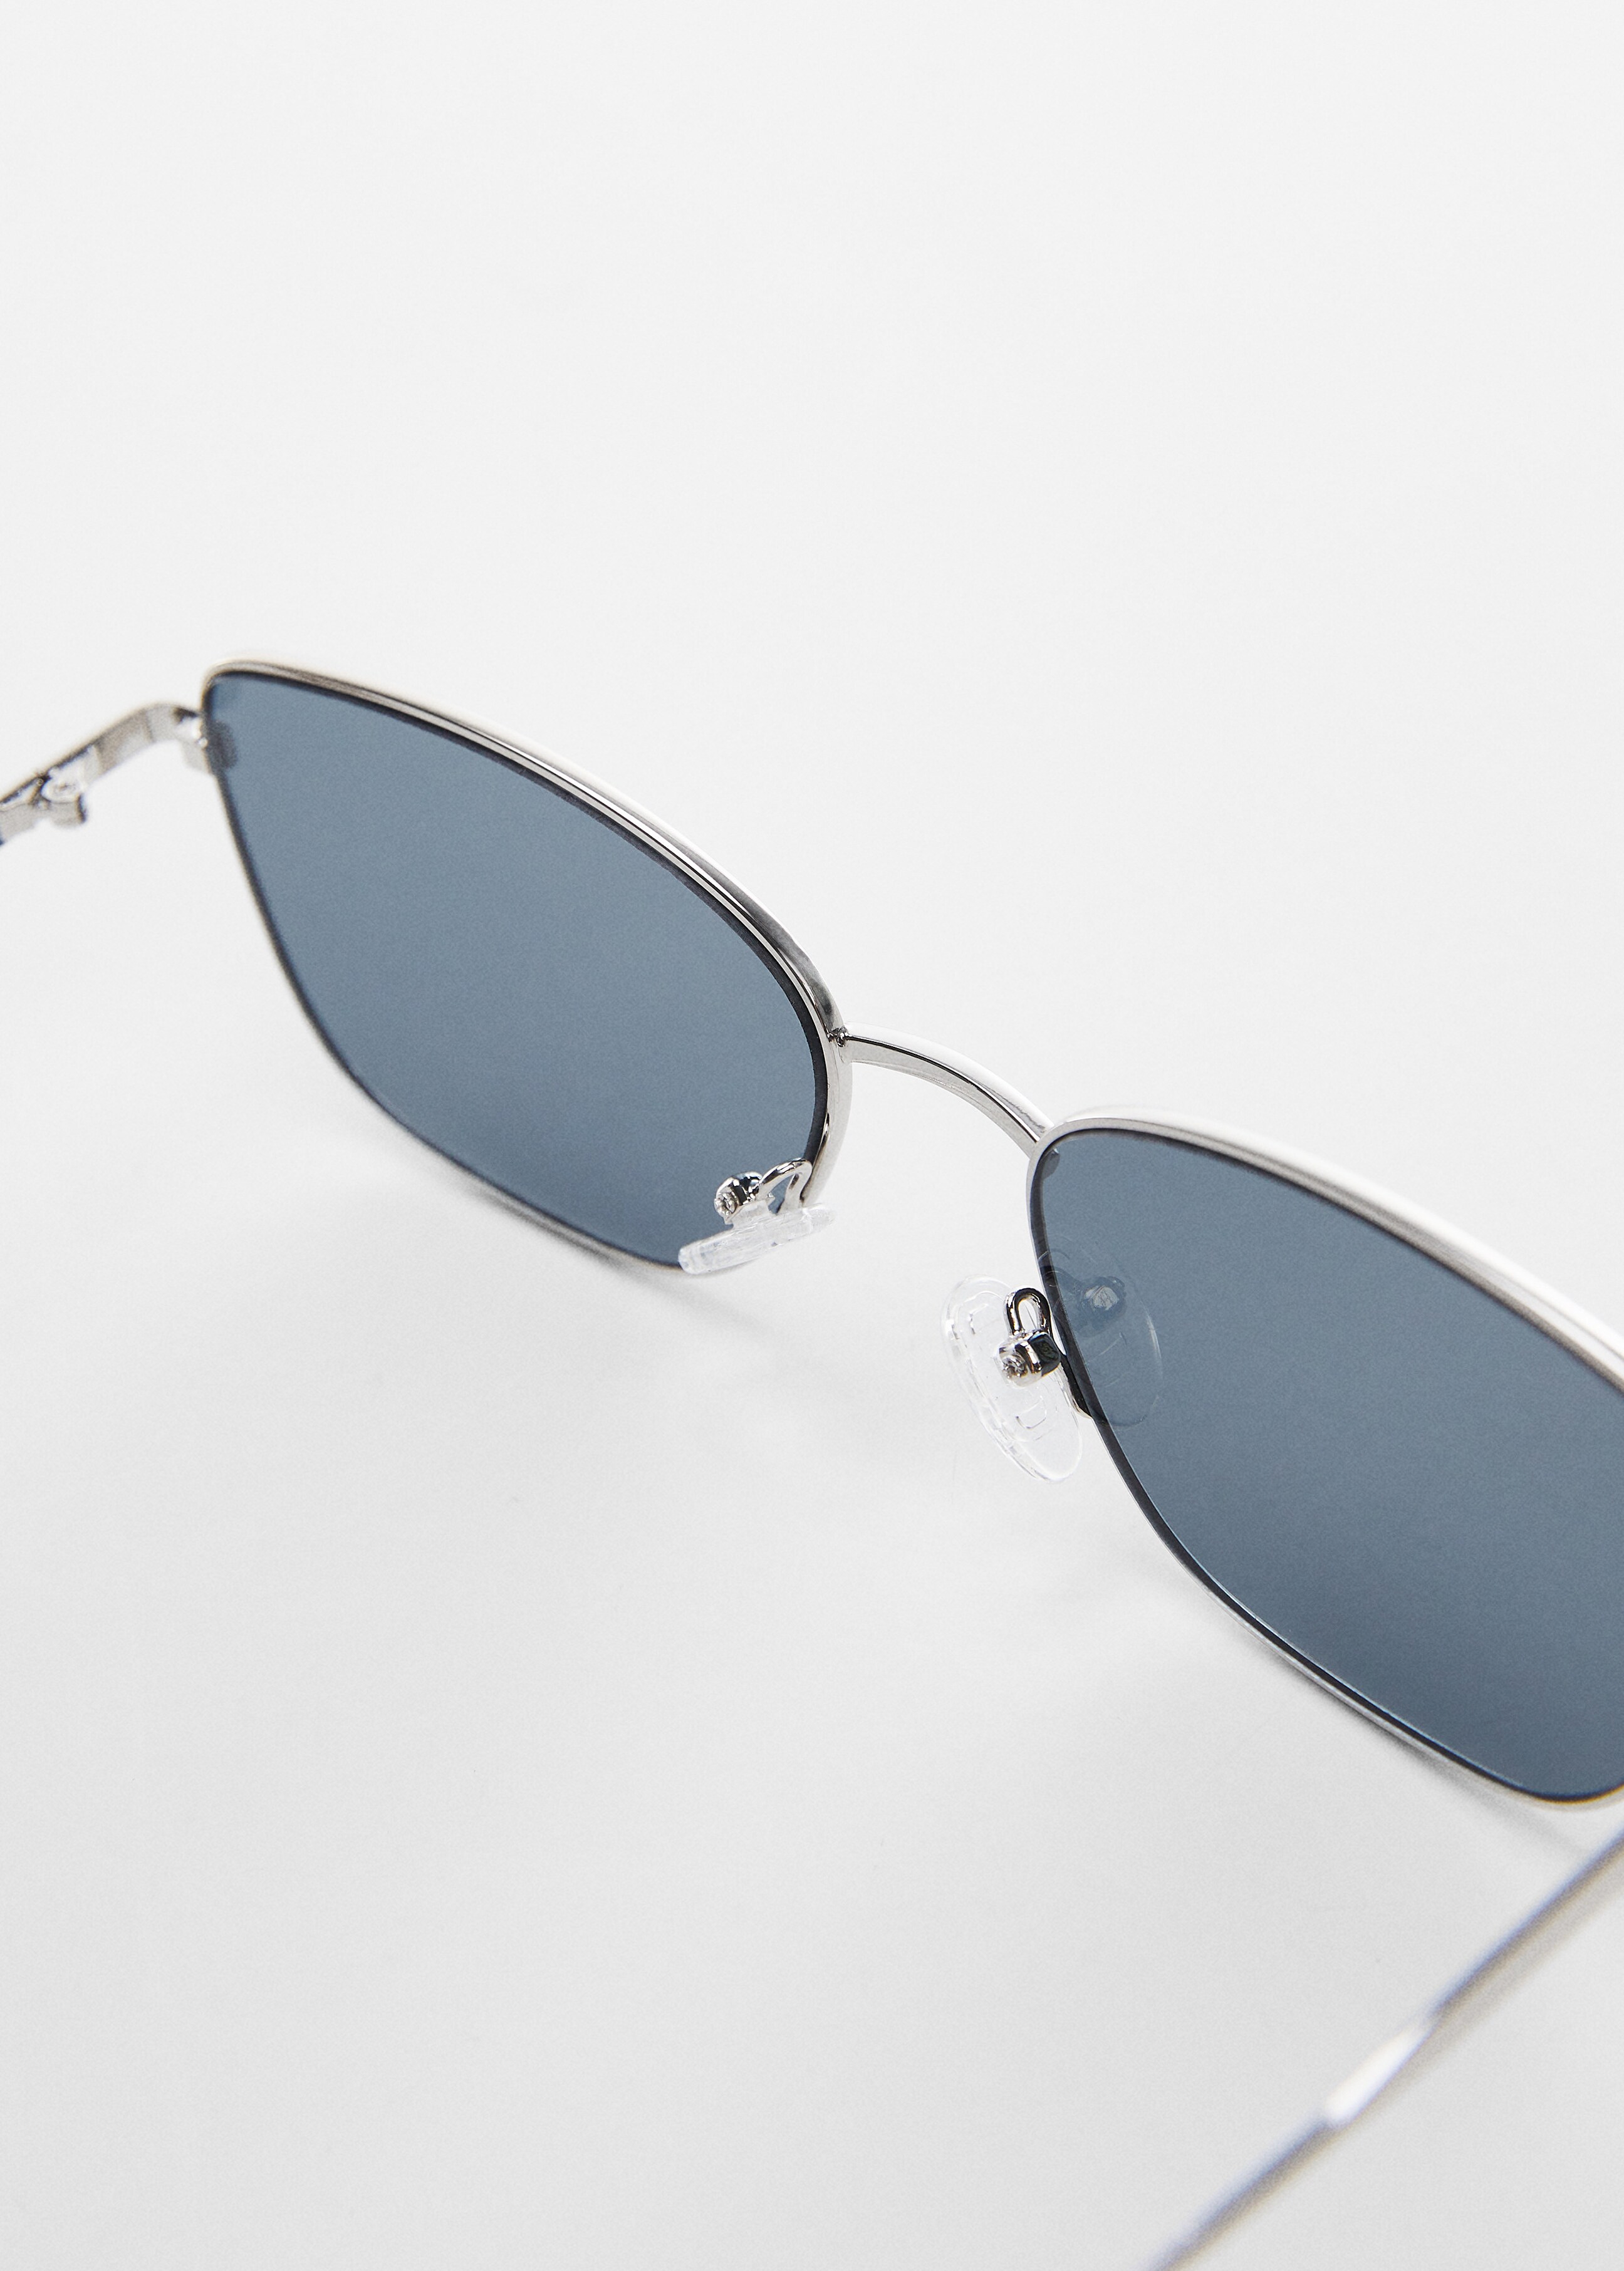 Metal bridge sunglasses - Details of the article 1